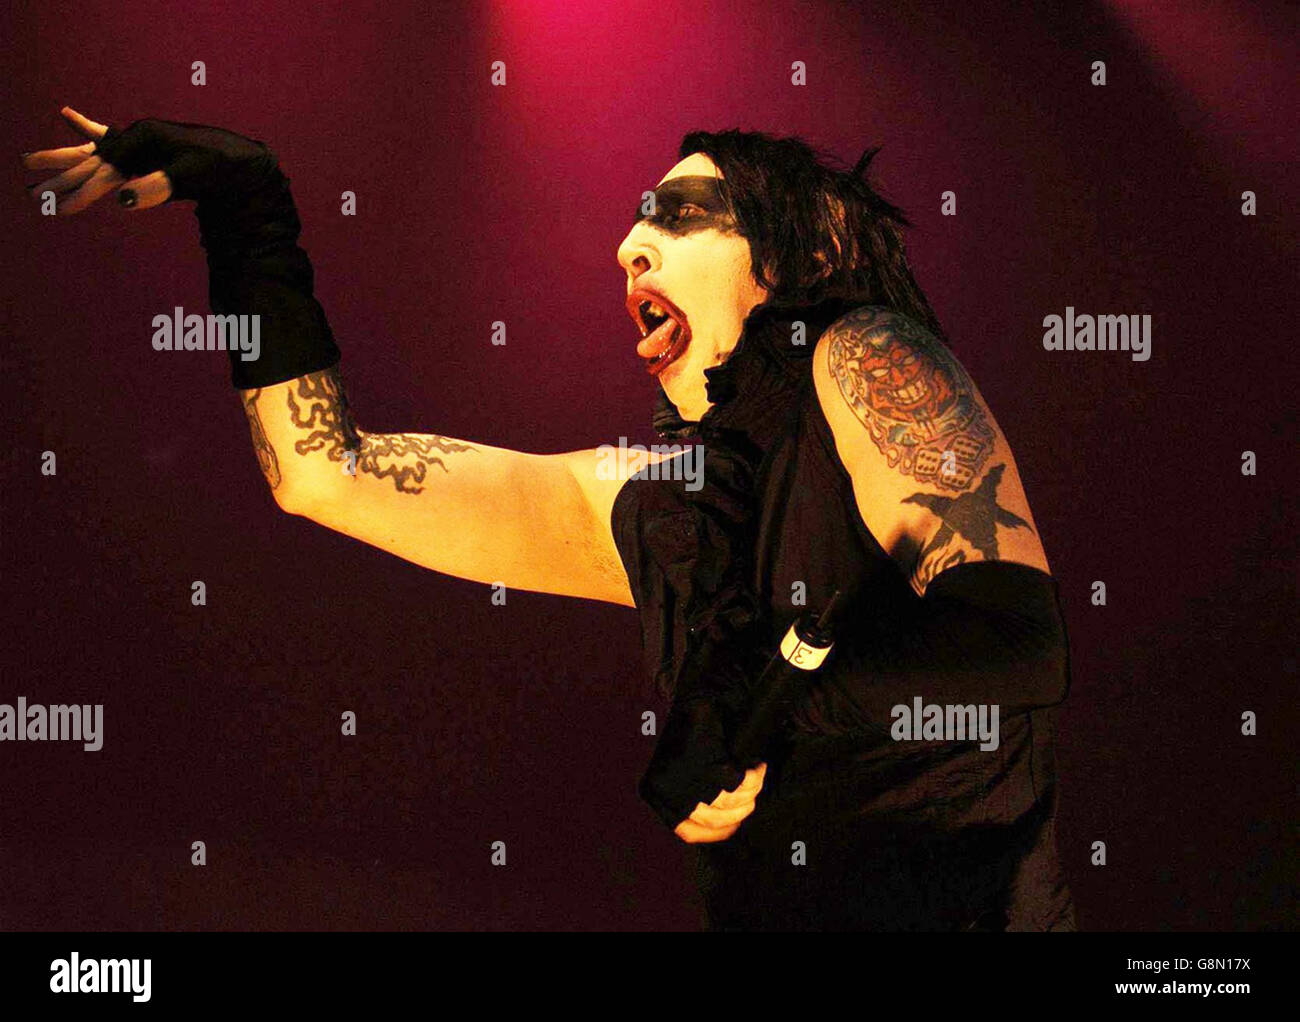 Tattoo of Marilyn Manson